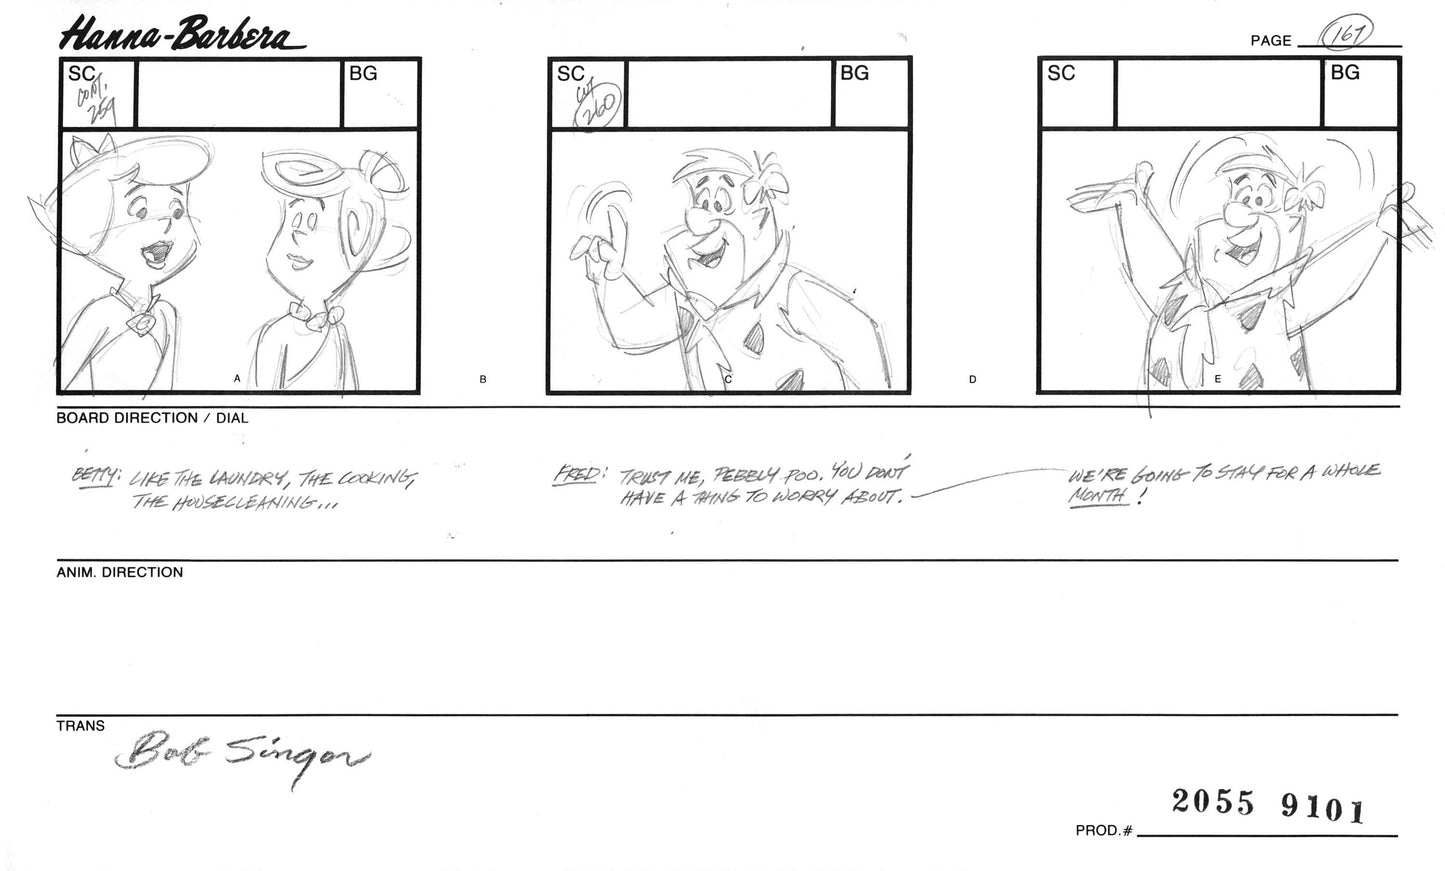 Flintstones Hollyrock-a-Bye Baby Animation Storyboard from Hanna Barbera Signed by Bob Singer 1993 167